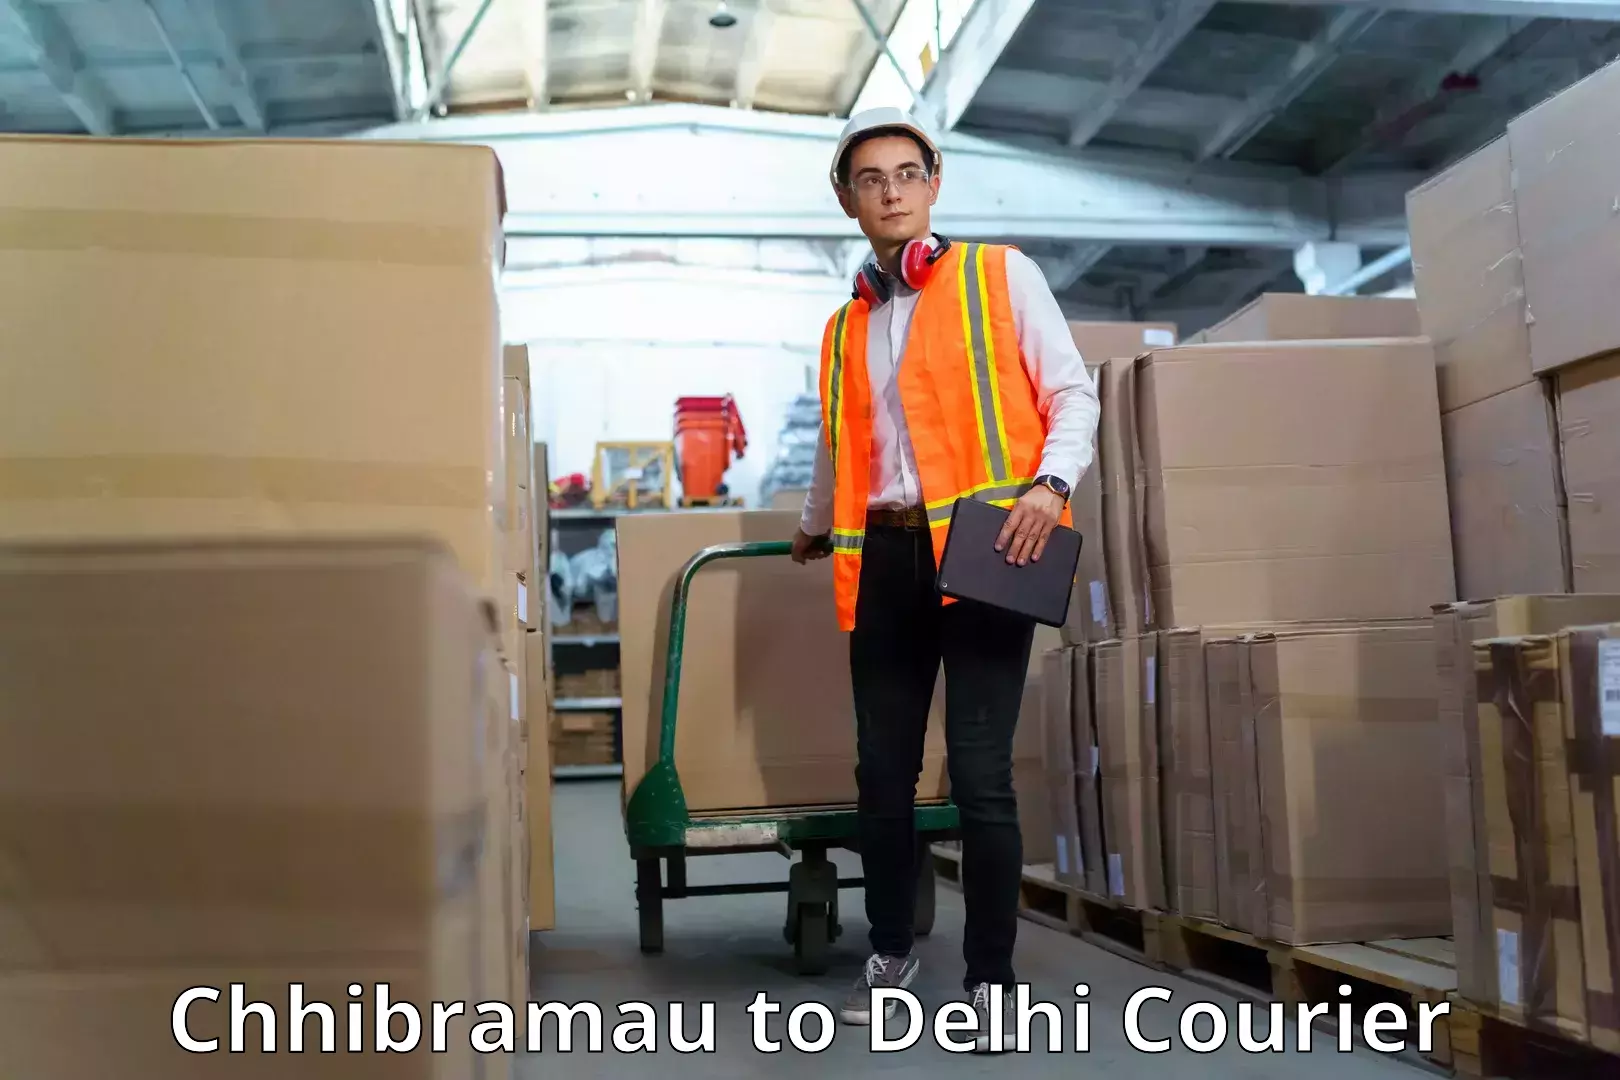 Professional courier handling Chhibramau to Delhi